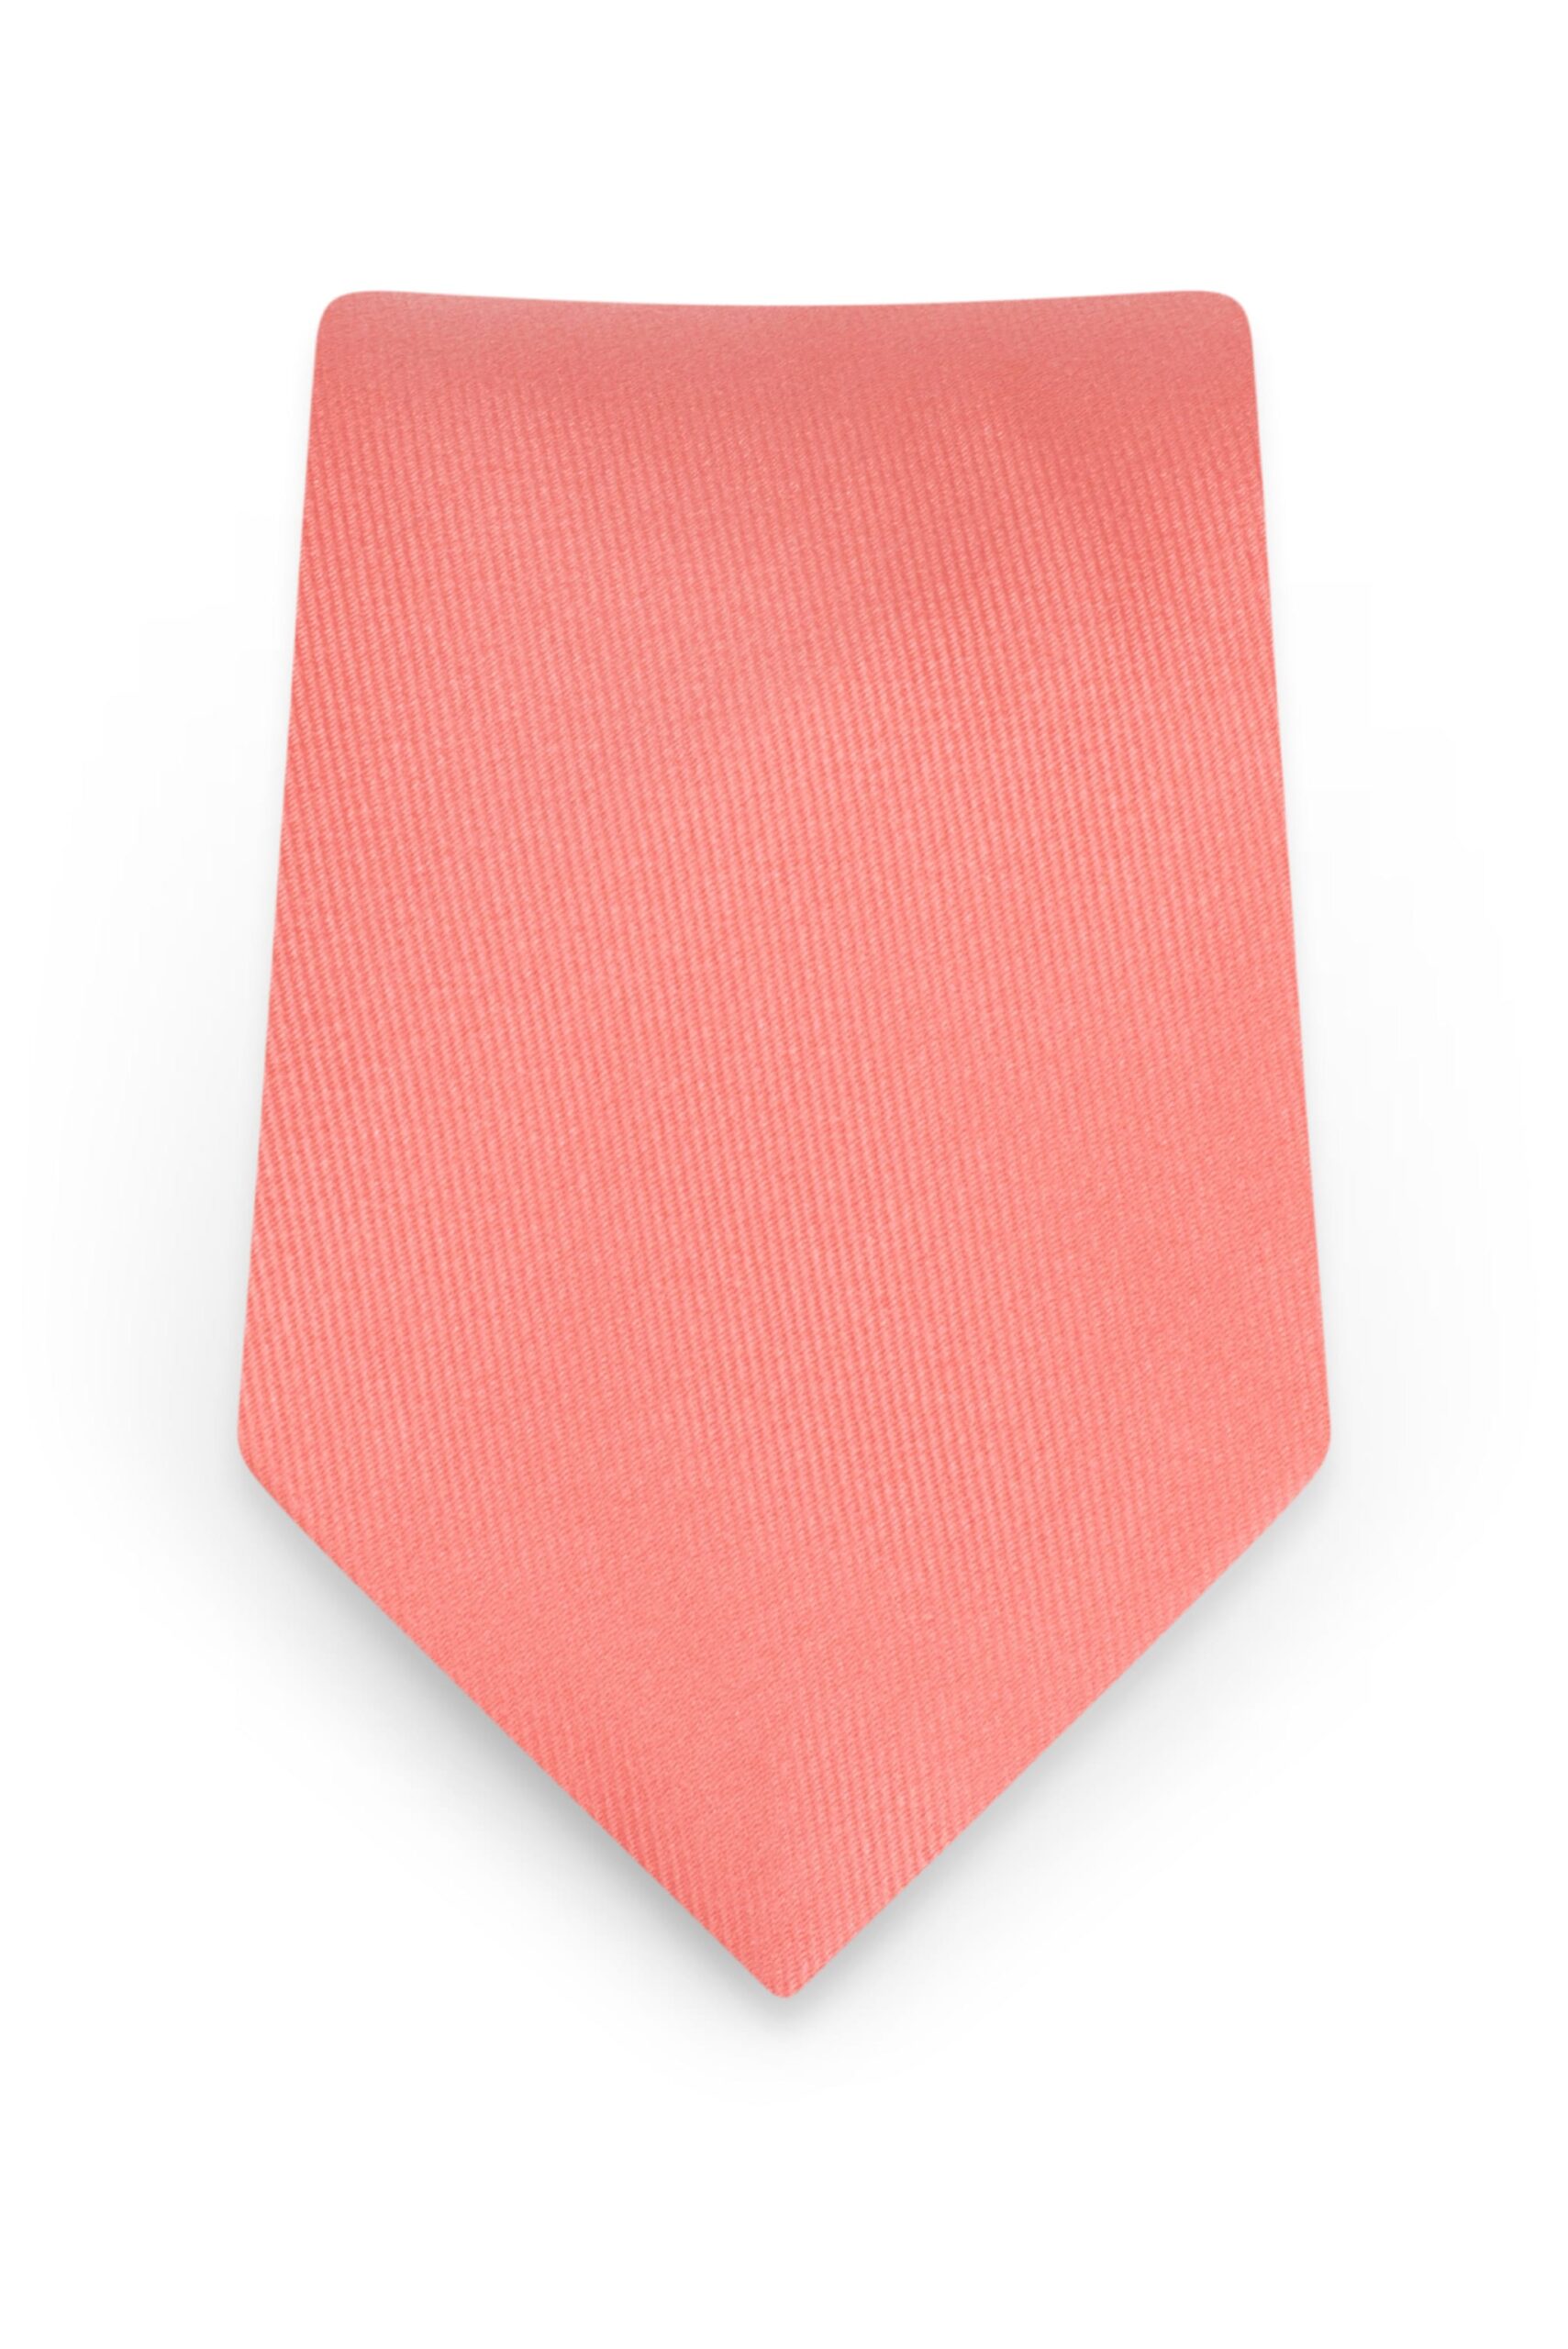 Solid Coral Self-Tie Windsor Tie 1